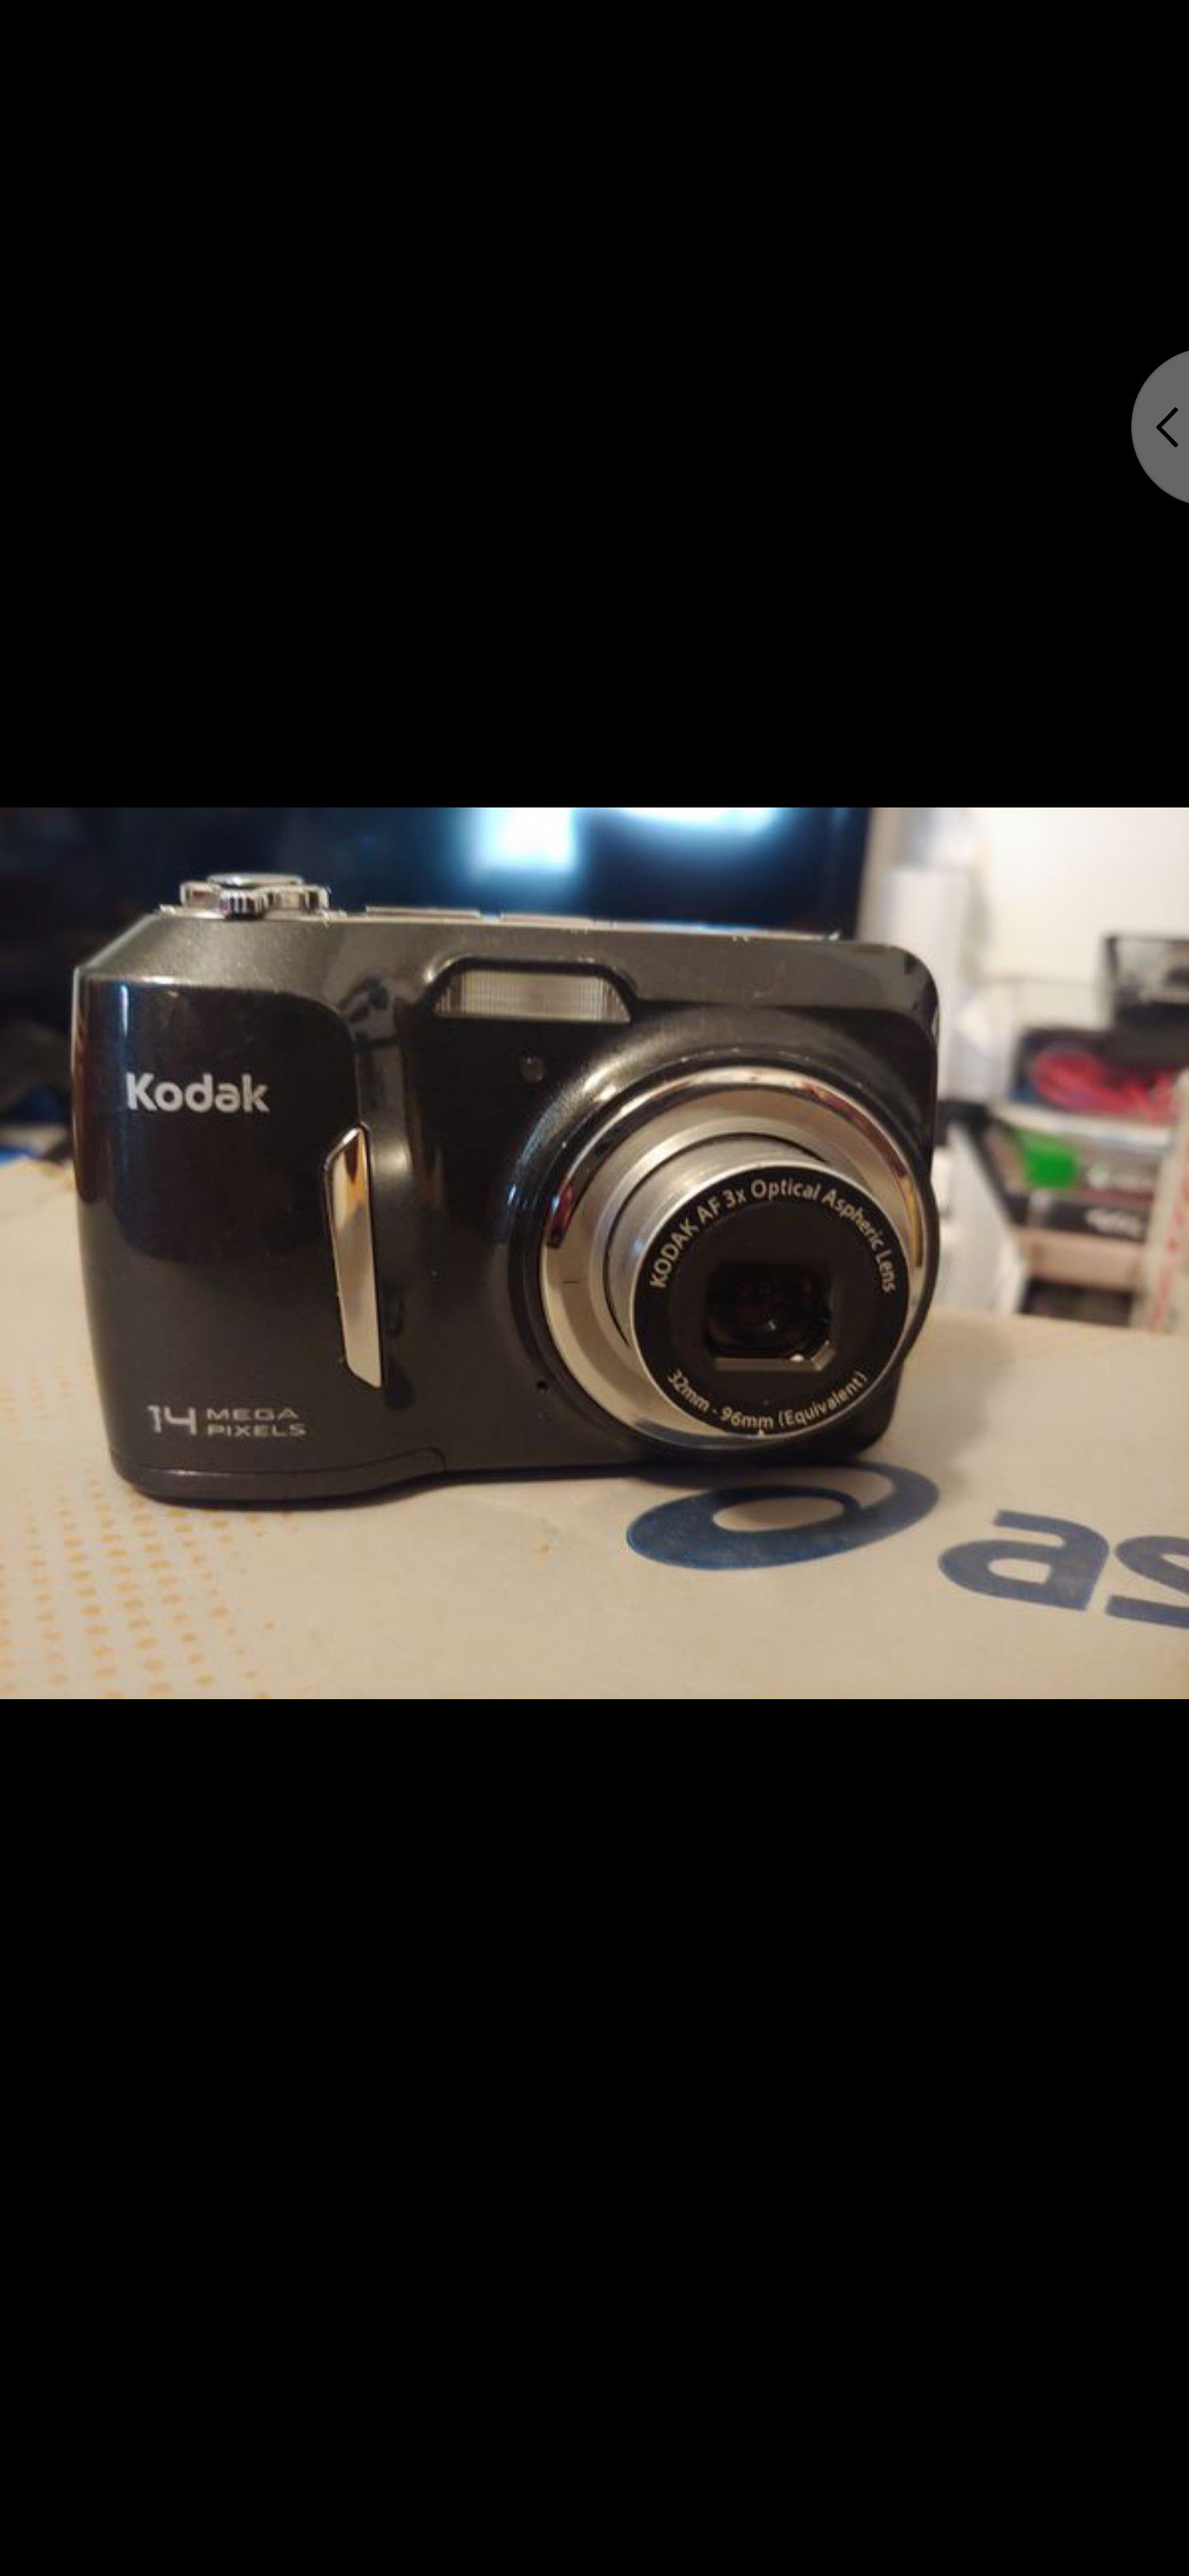 Kodak Easyshare c183 digital camera with 1 GB memory card